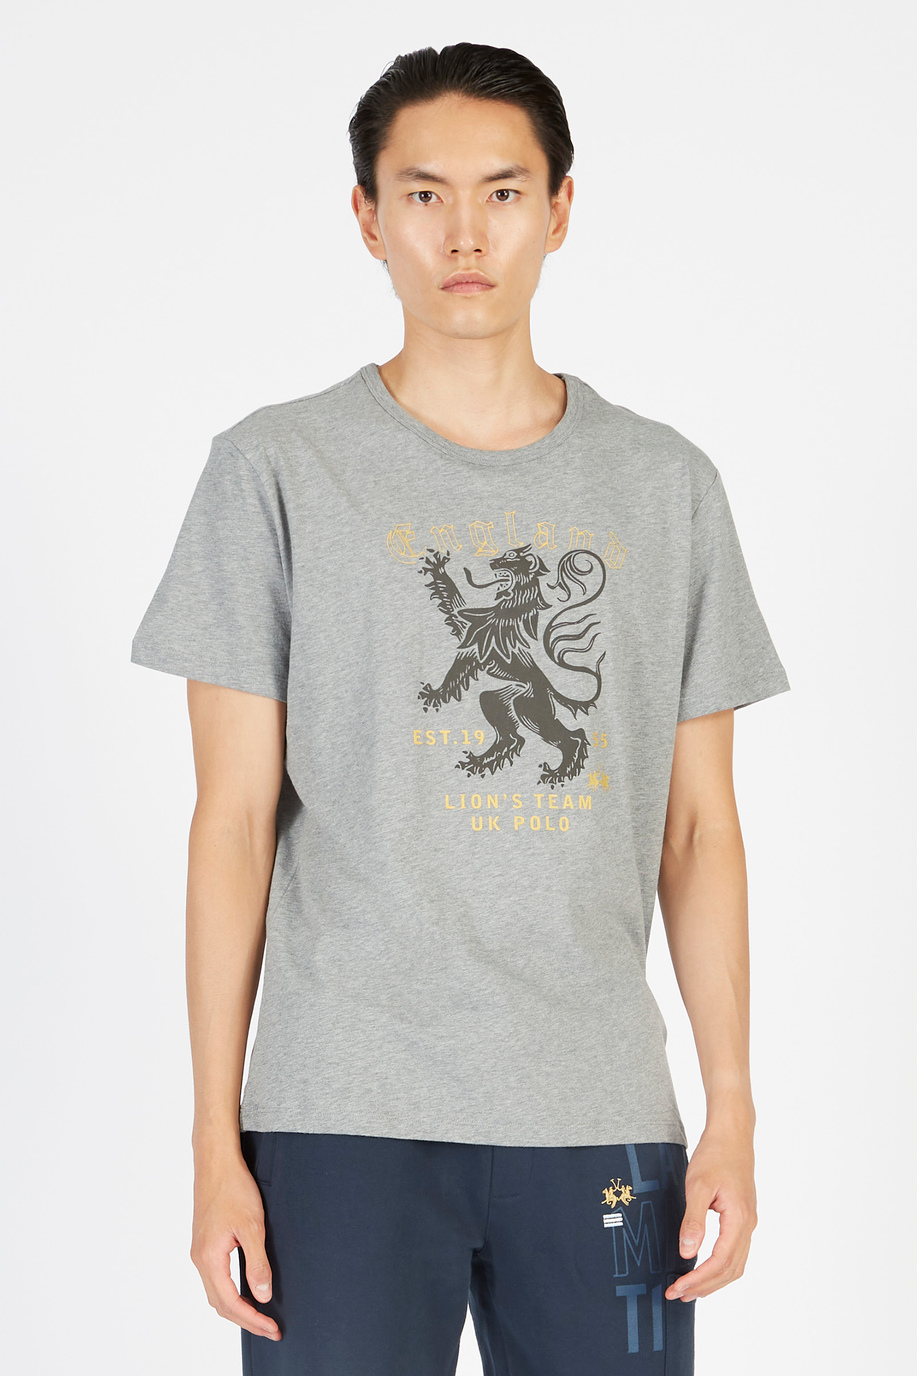 Kurzarm-T-Shirt aus Baumwolle mit 100% Komfort - T-Shirts | La Martina - Official Online Shop